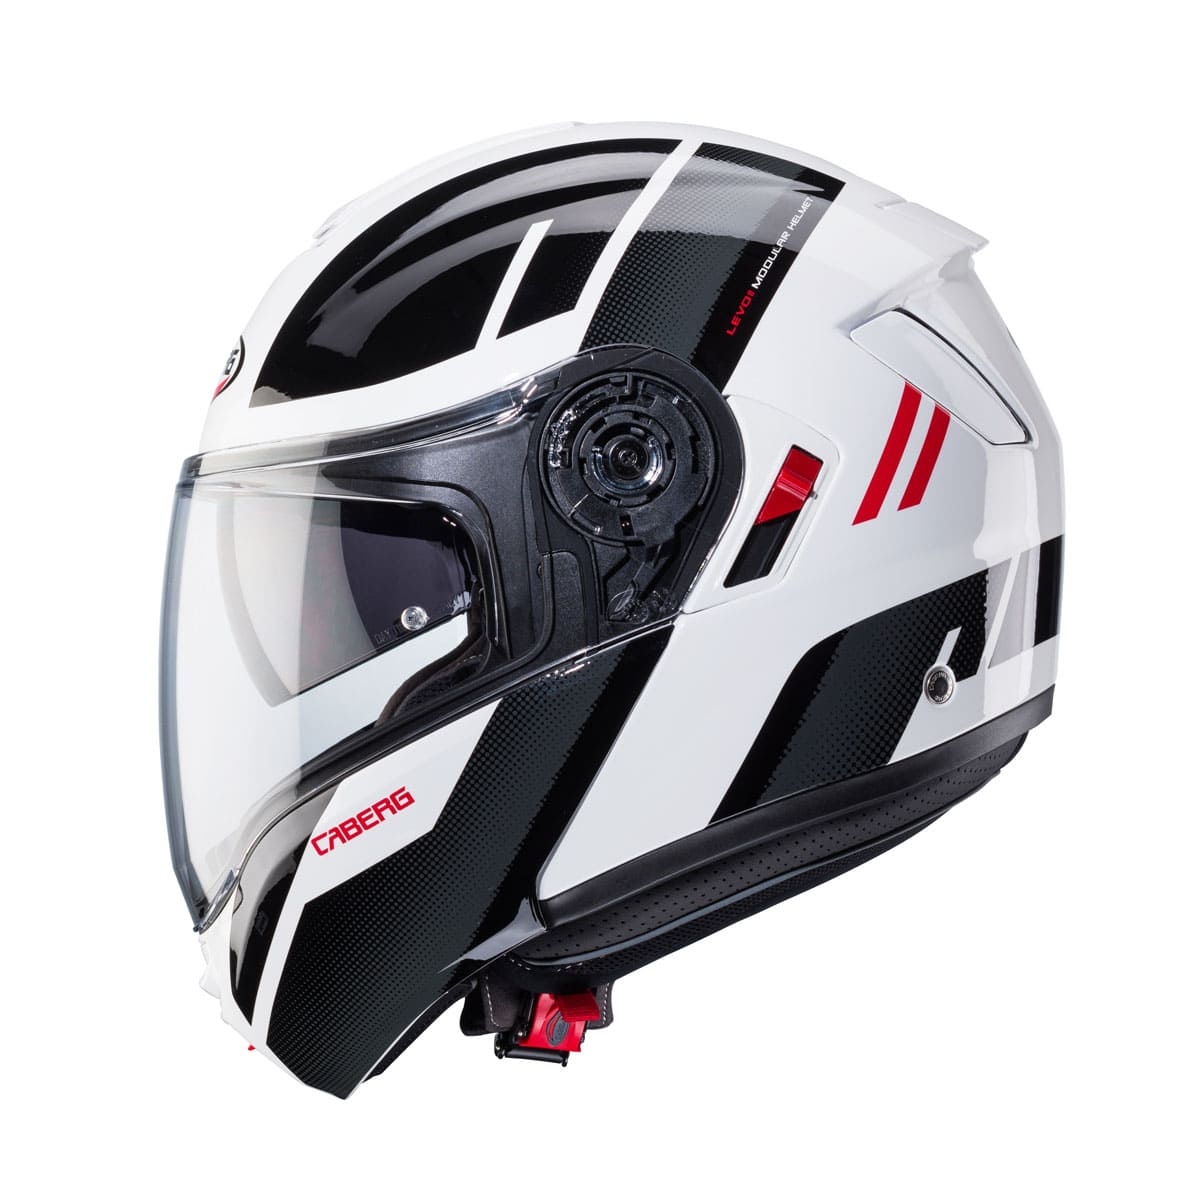 Caberg Levo X Manta - White/Anthracite/Red | Caberg Motorcycle Helmets ...